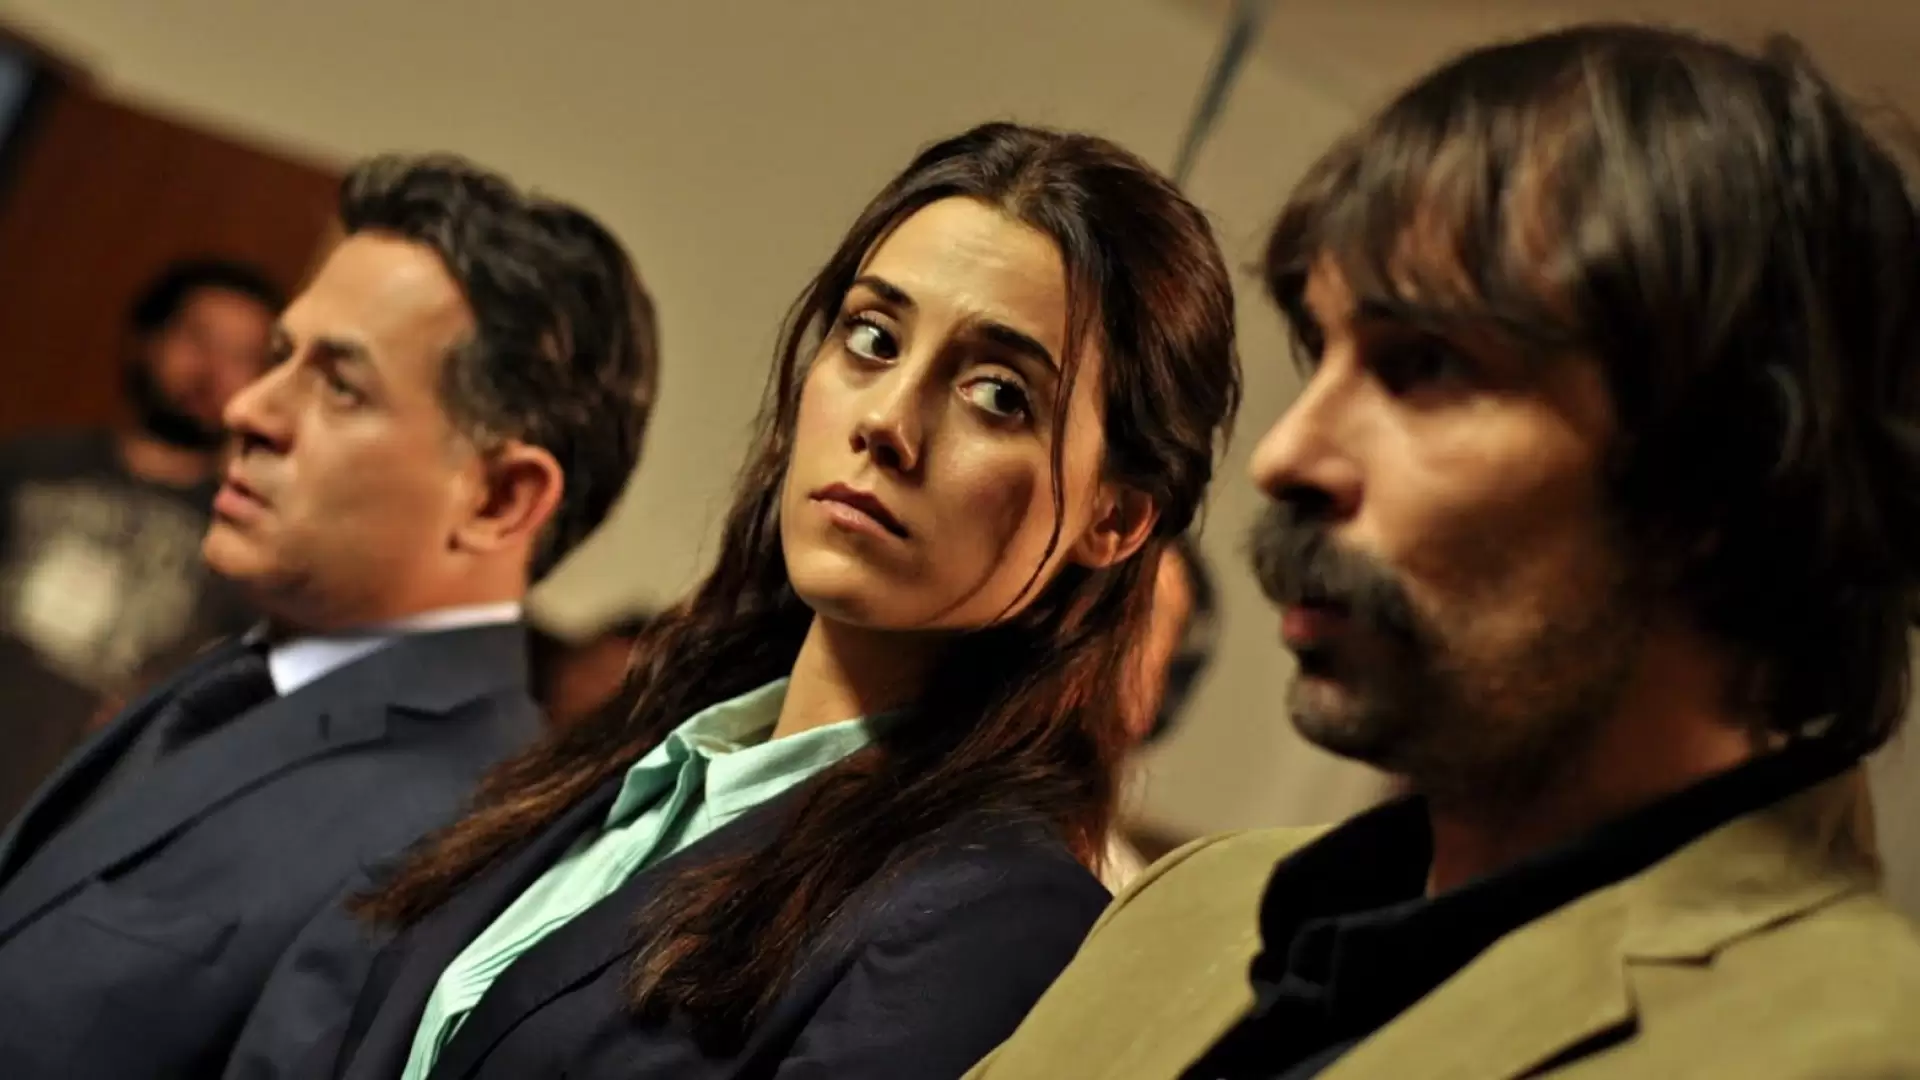 دانلود فیلم Behzat Ç.: Seni Kalbime Gömdüm 2011